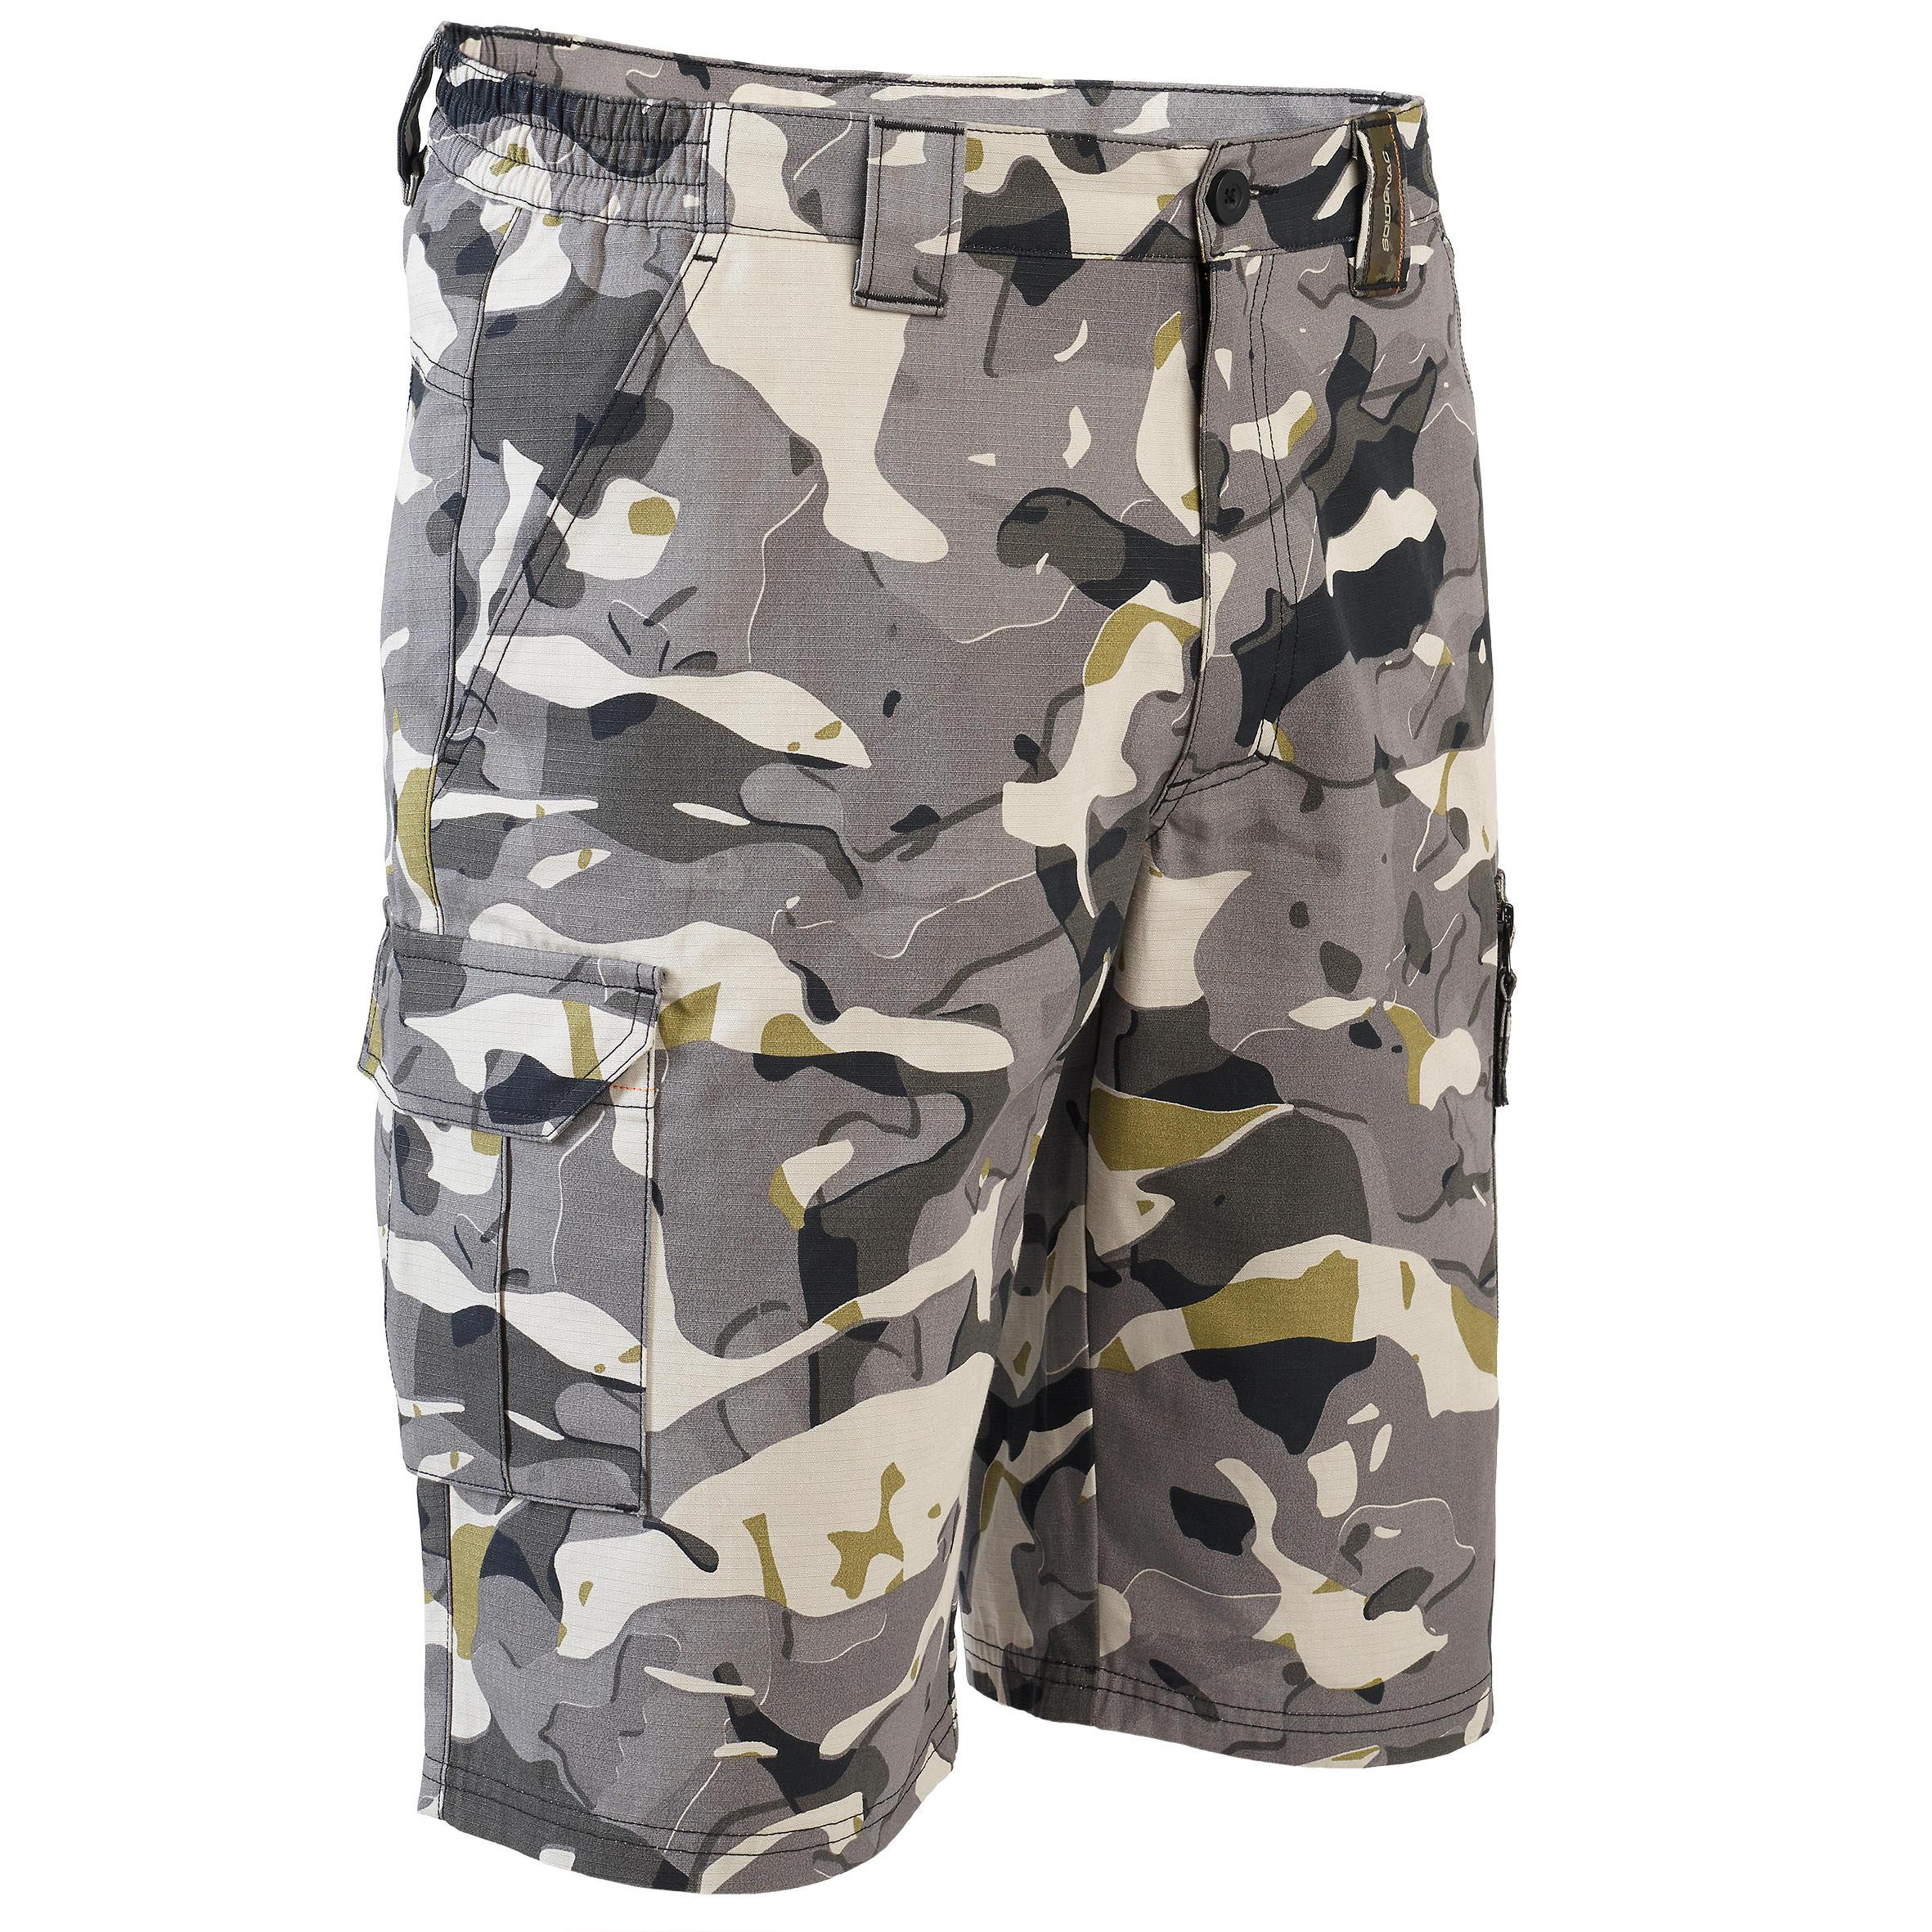 Bermuda shorts 500 - Woodland V1 mineral grey LTD camouflage 1/13